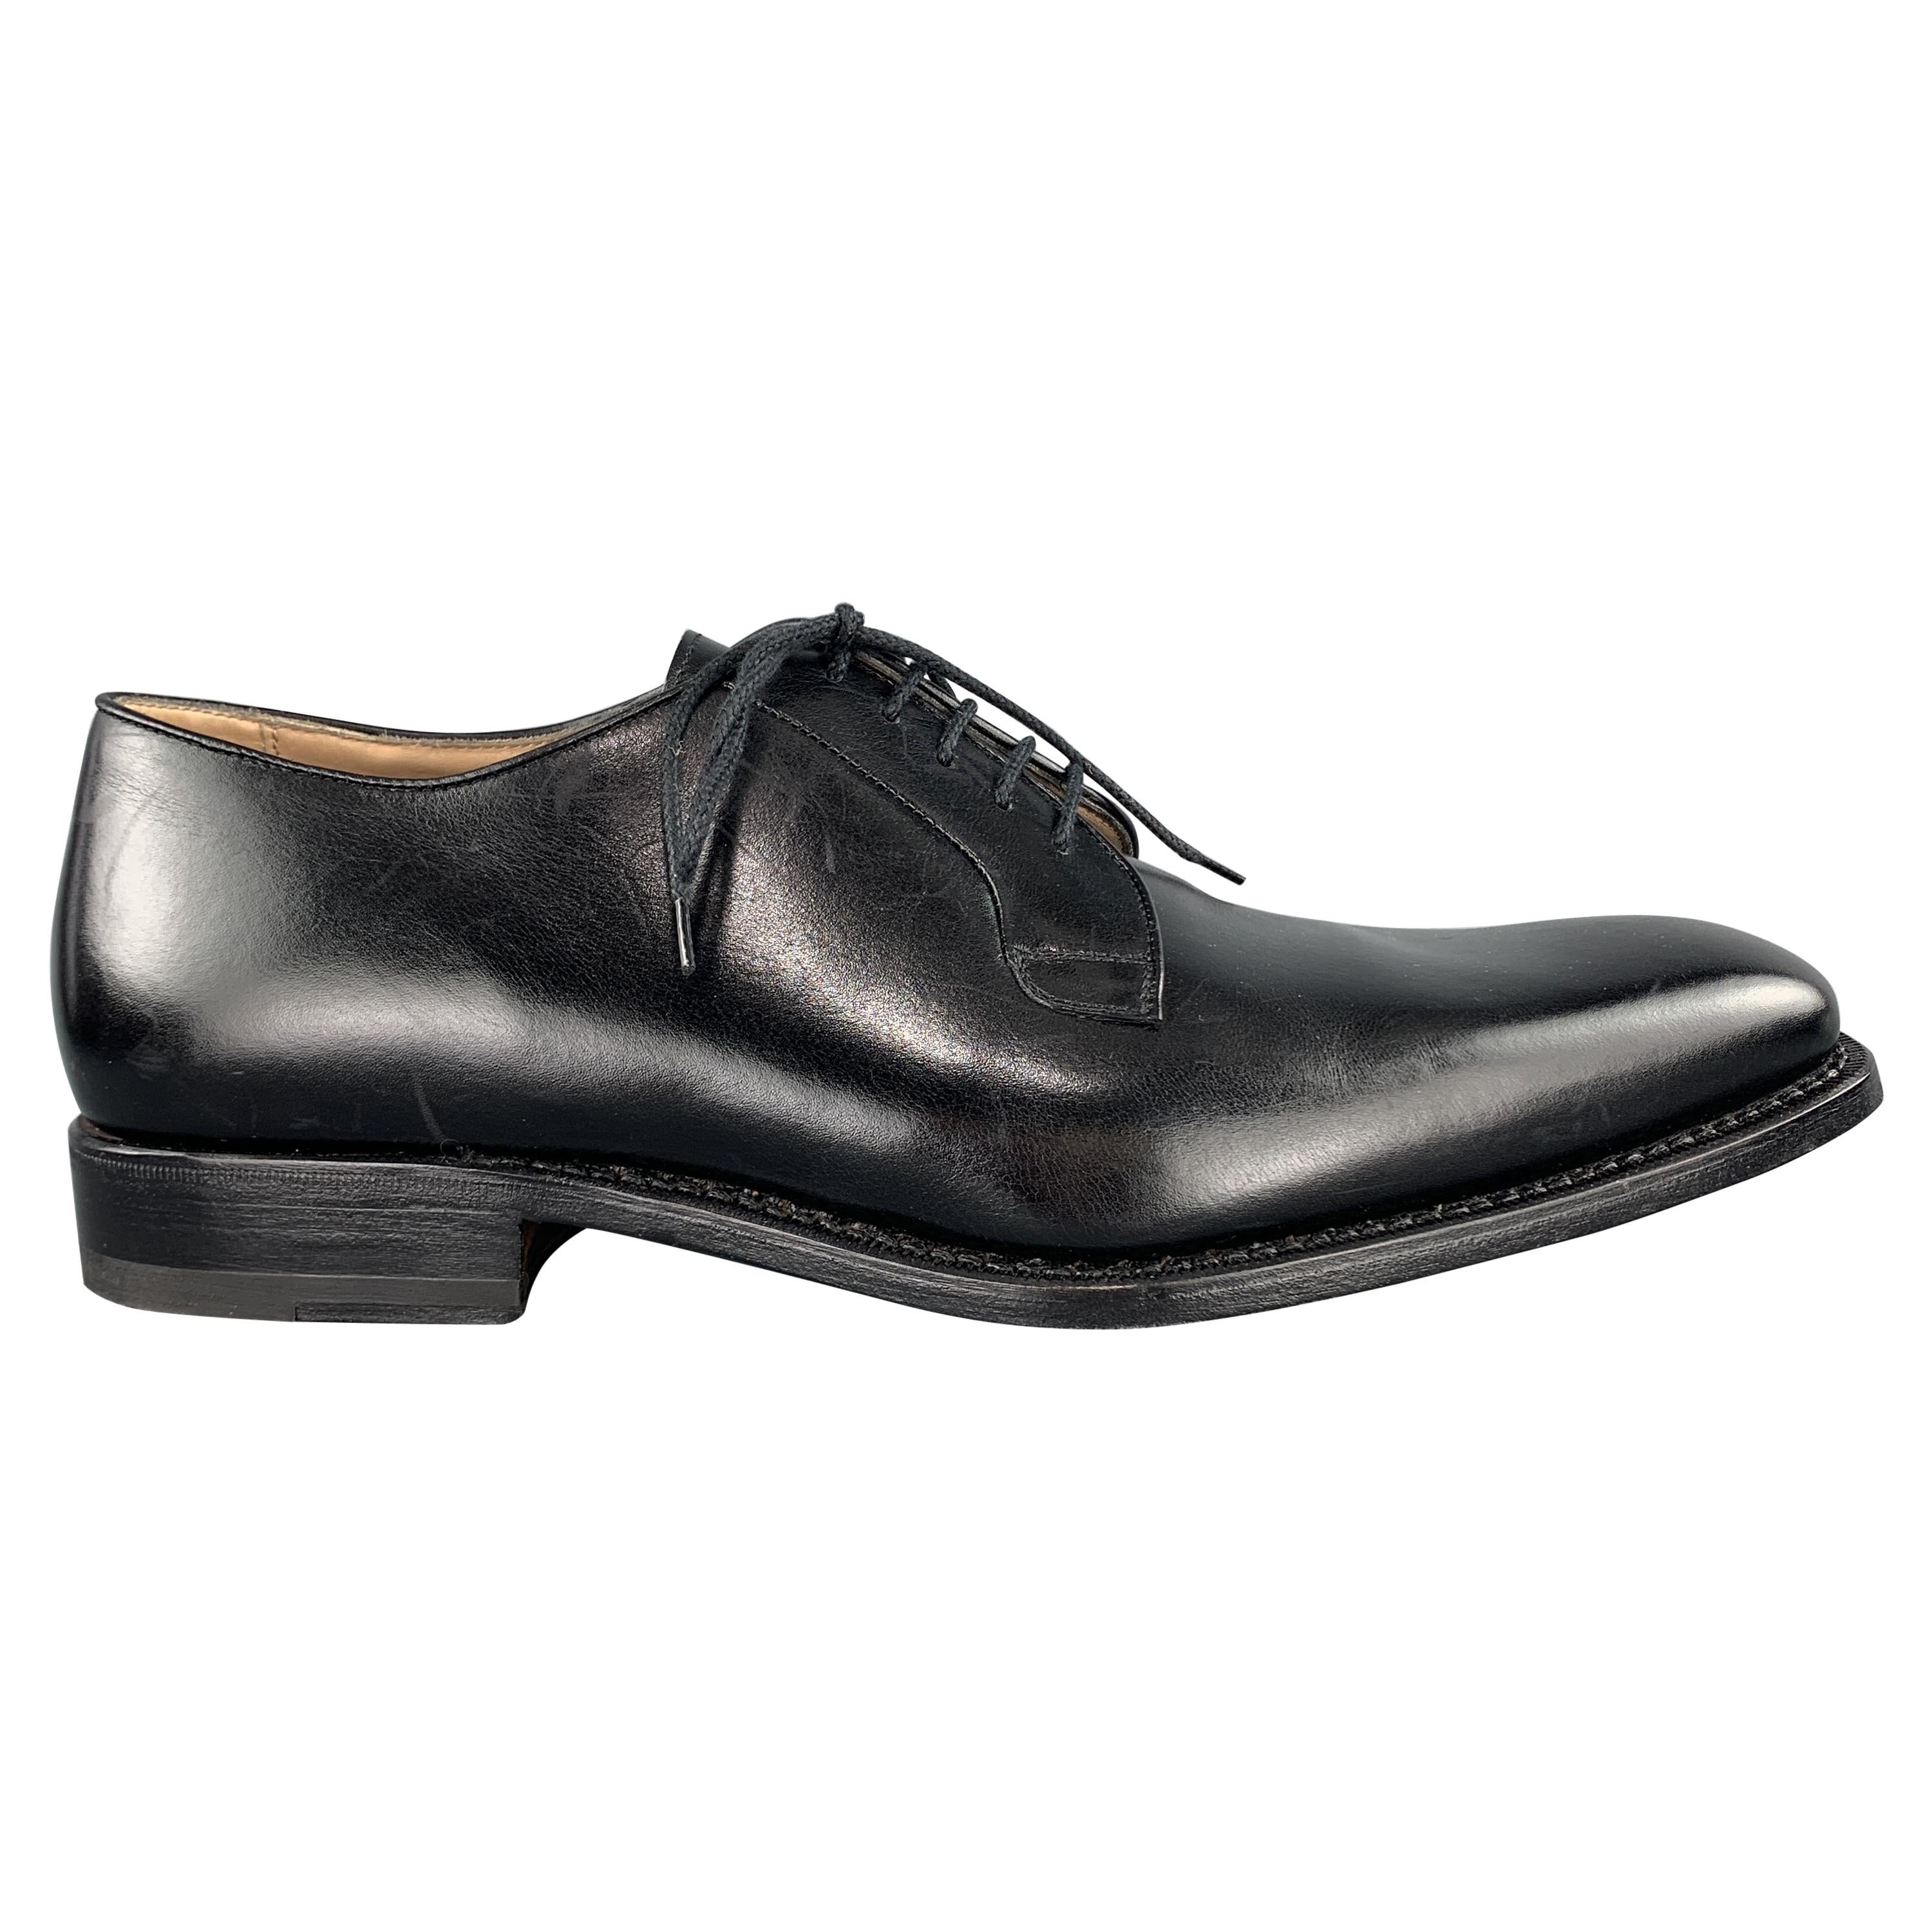 CALZOLERIA HARRIS Size 10 Black Leather Square Toe Dress Shoe